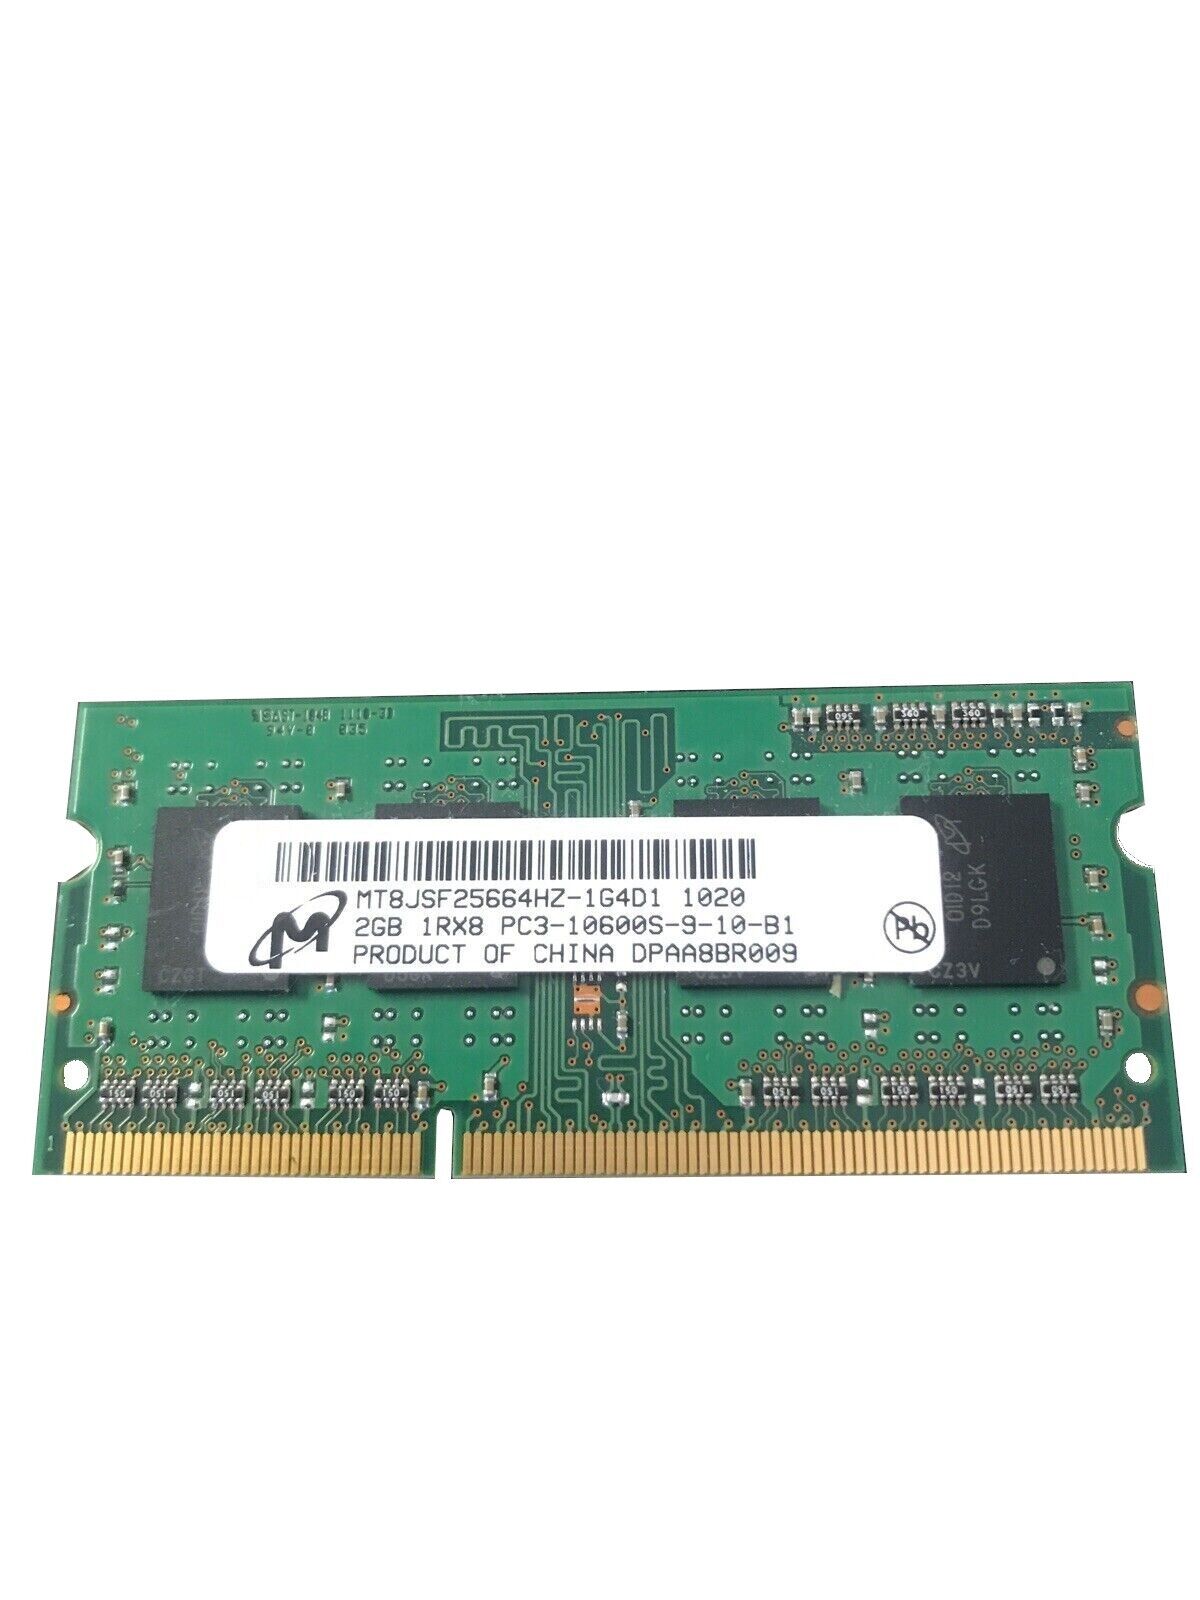 Micron 2GB DDR3 SODIMM Laptop 1Rx8 PC3-10600S Memory RAM - MTBJSF25664HZ-1G4D1